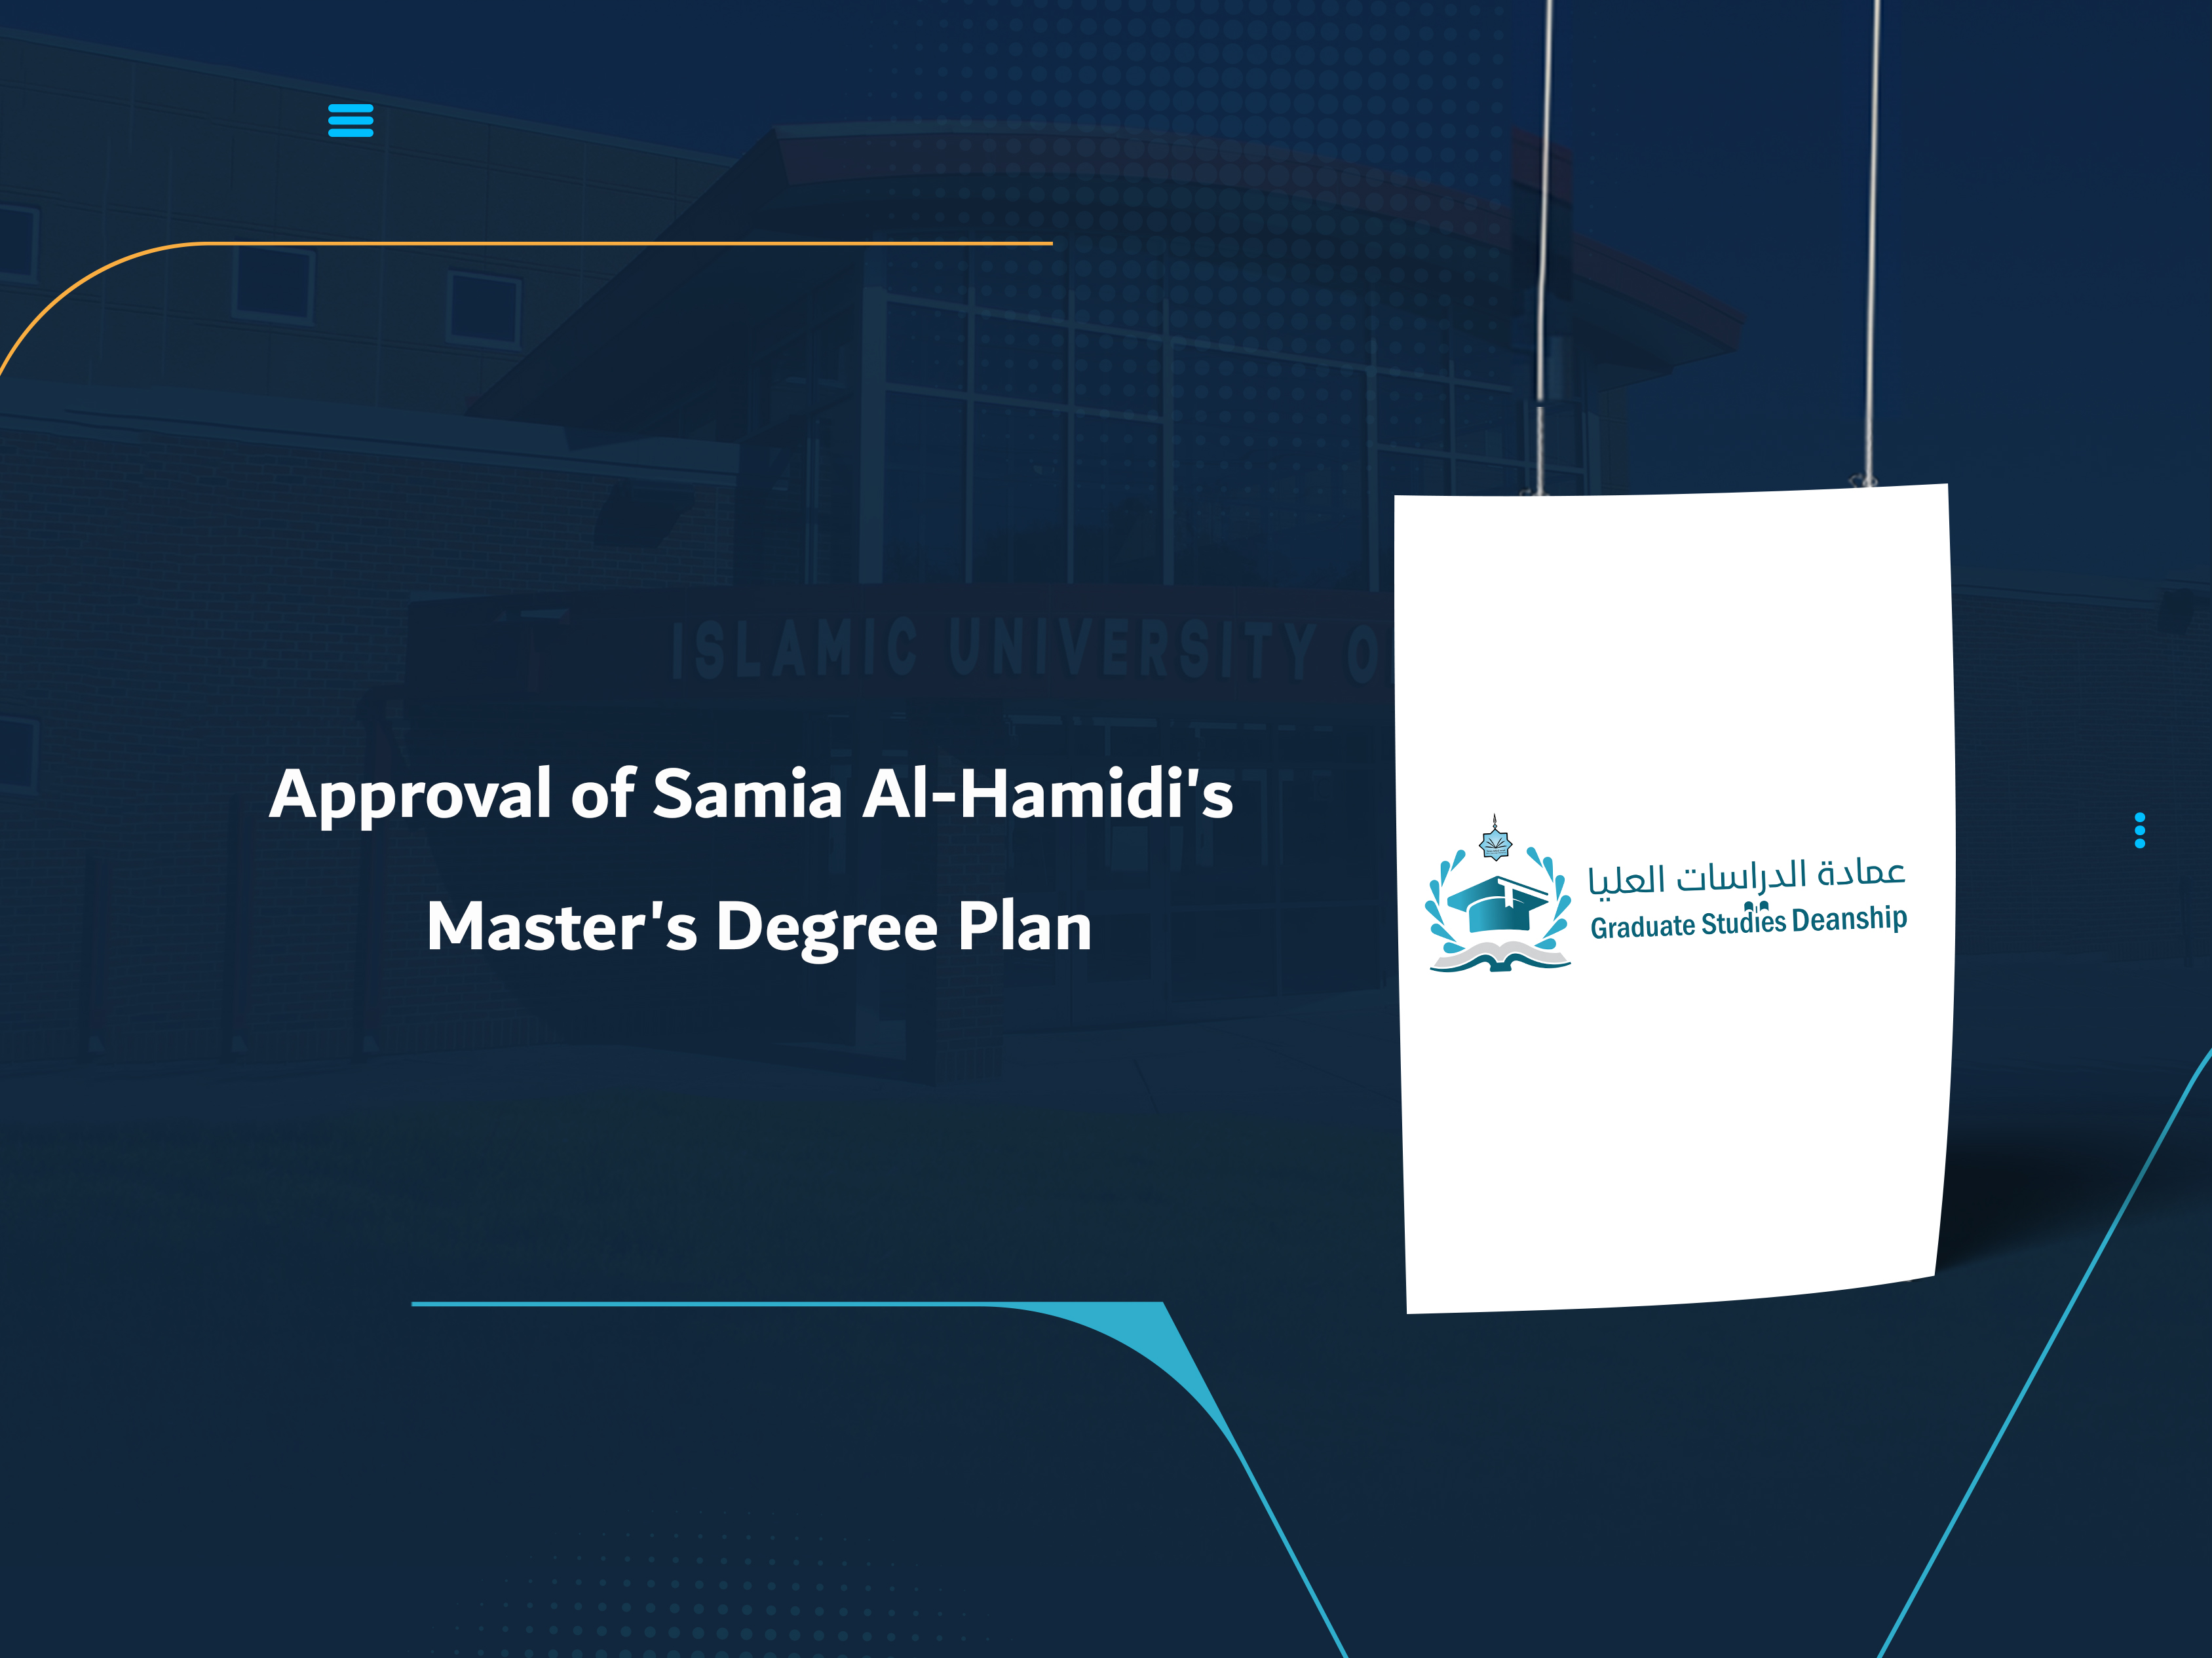 Approval of Samia Al-Hamidi's Master's Degree Plan